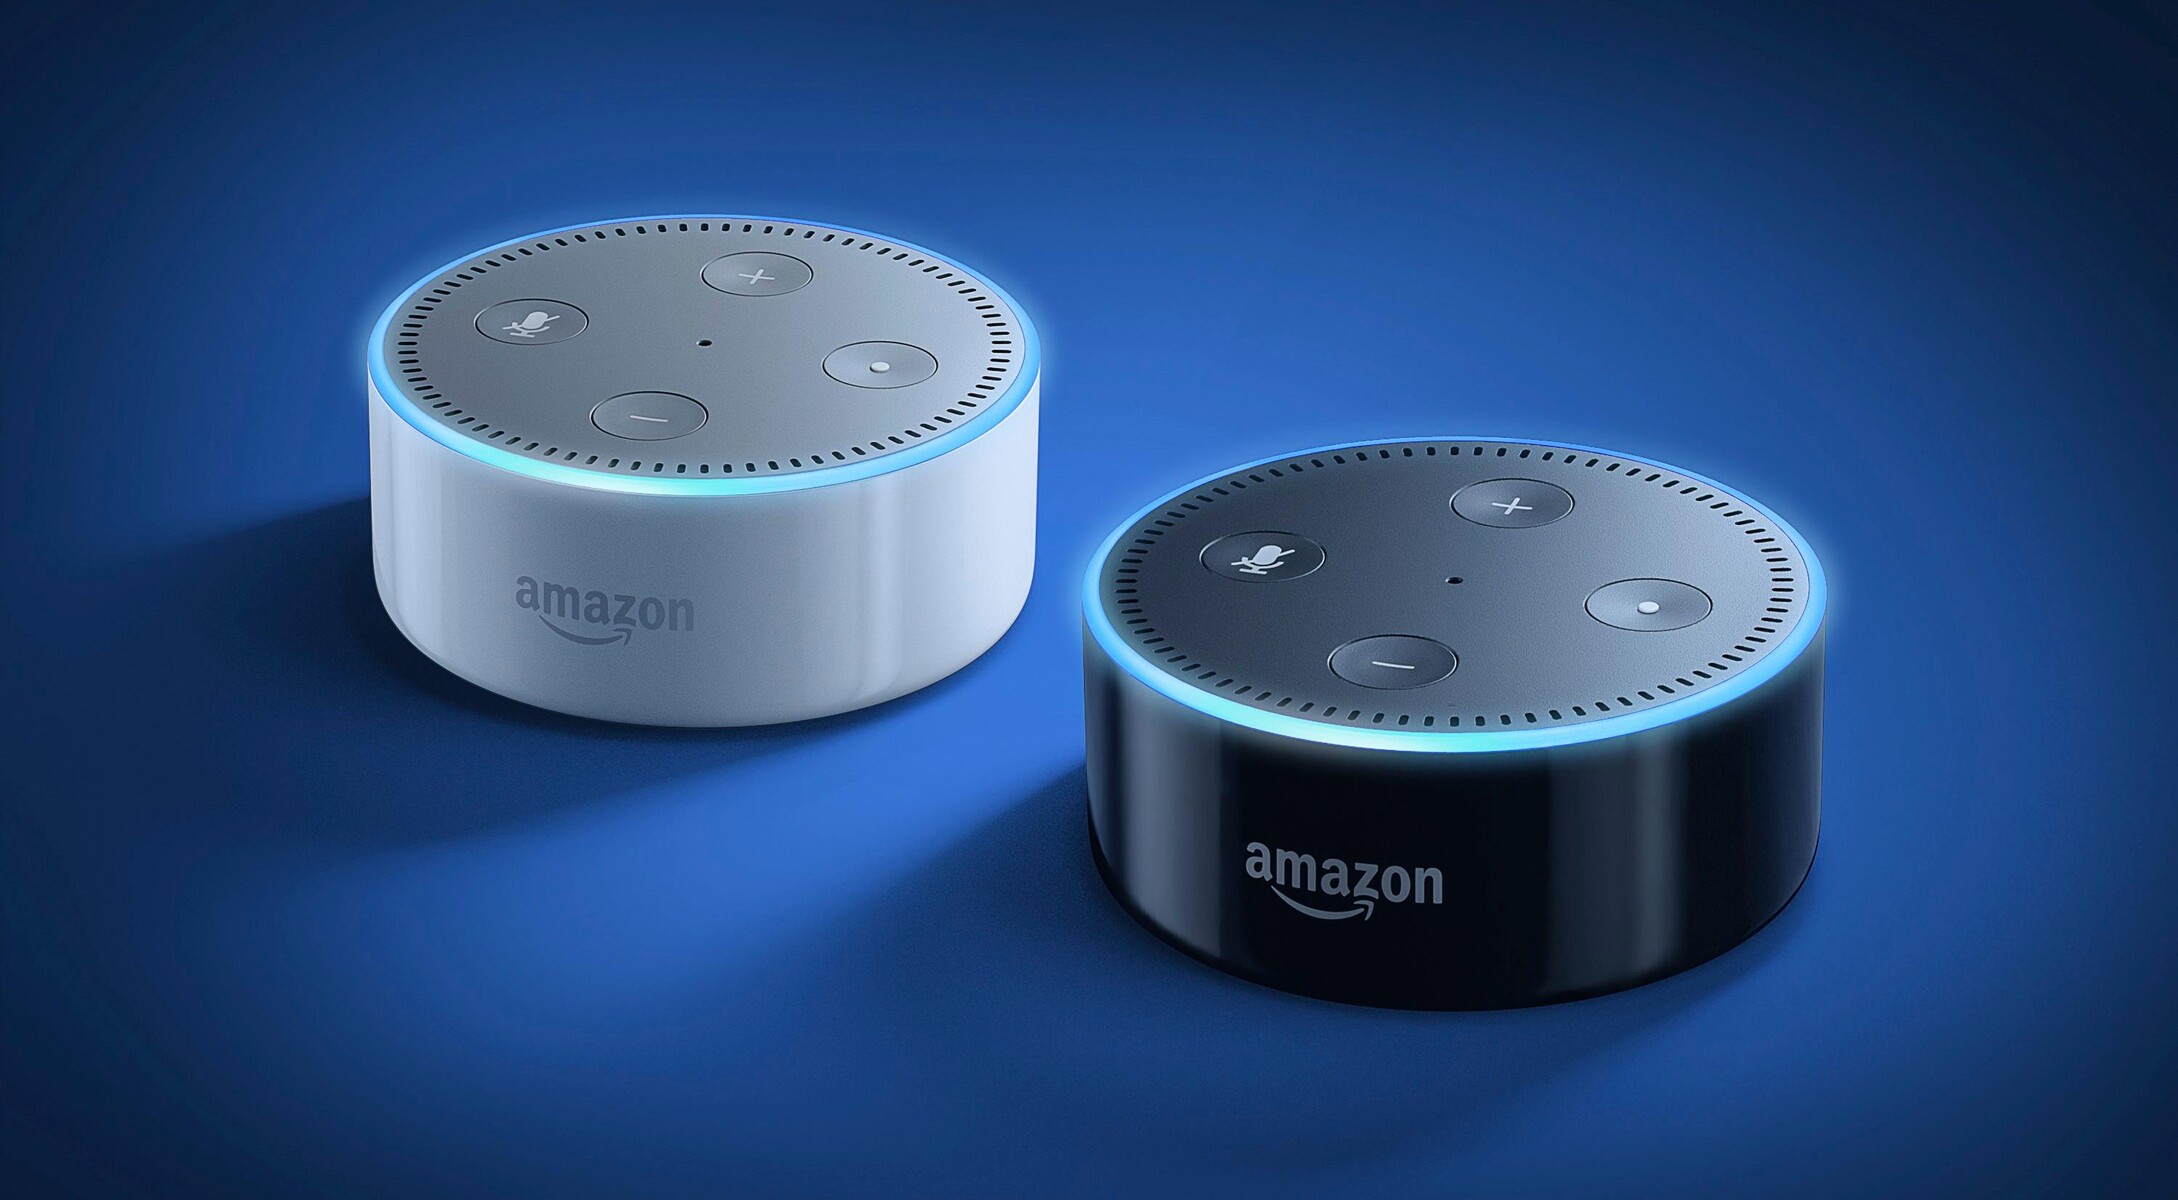 Amazon Echo Dot (2nd Generation) Smart Speaker With Alexa: How It Works